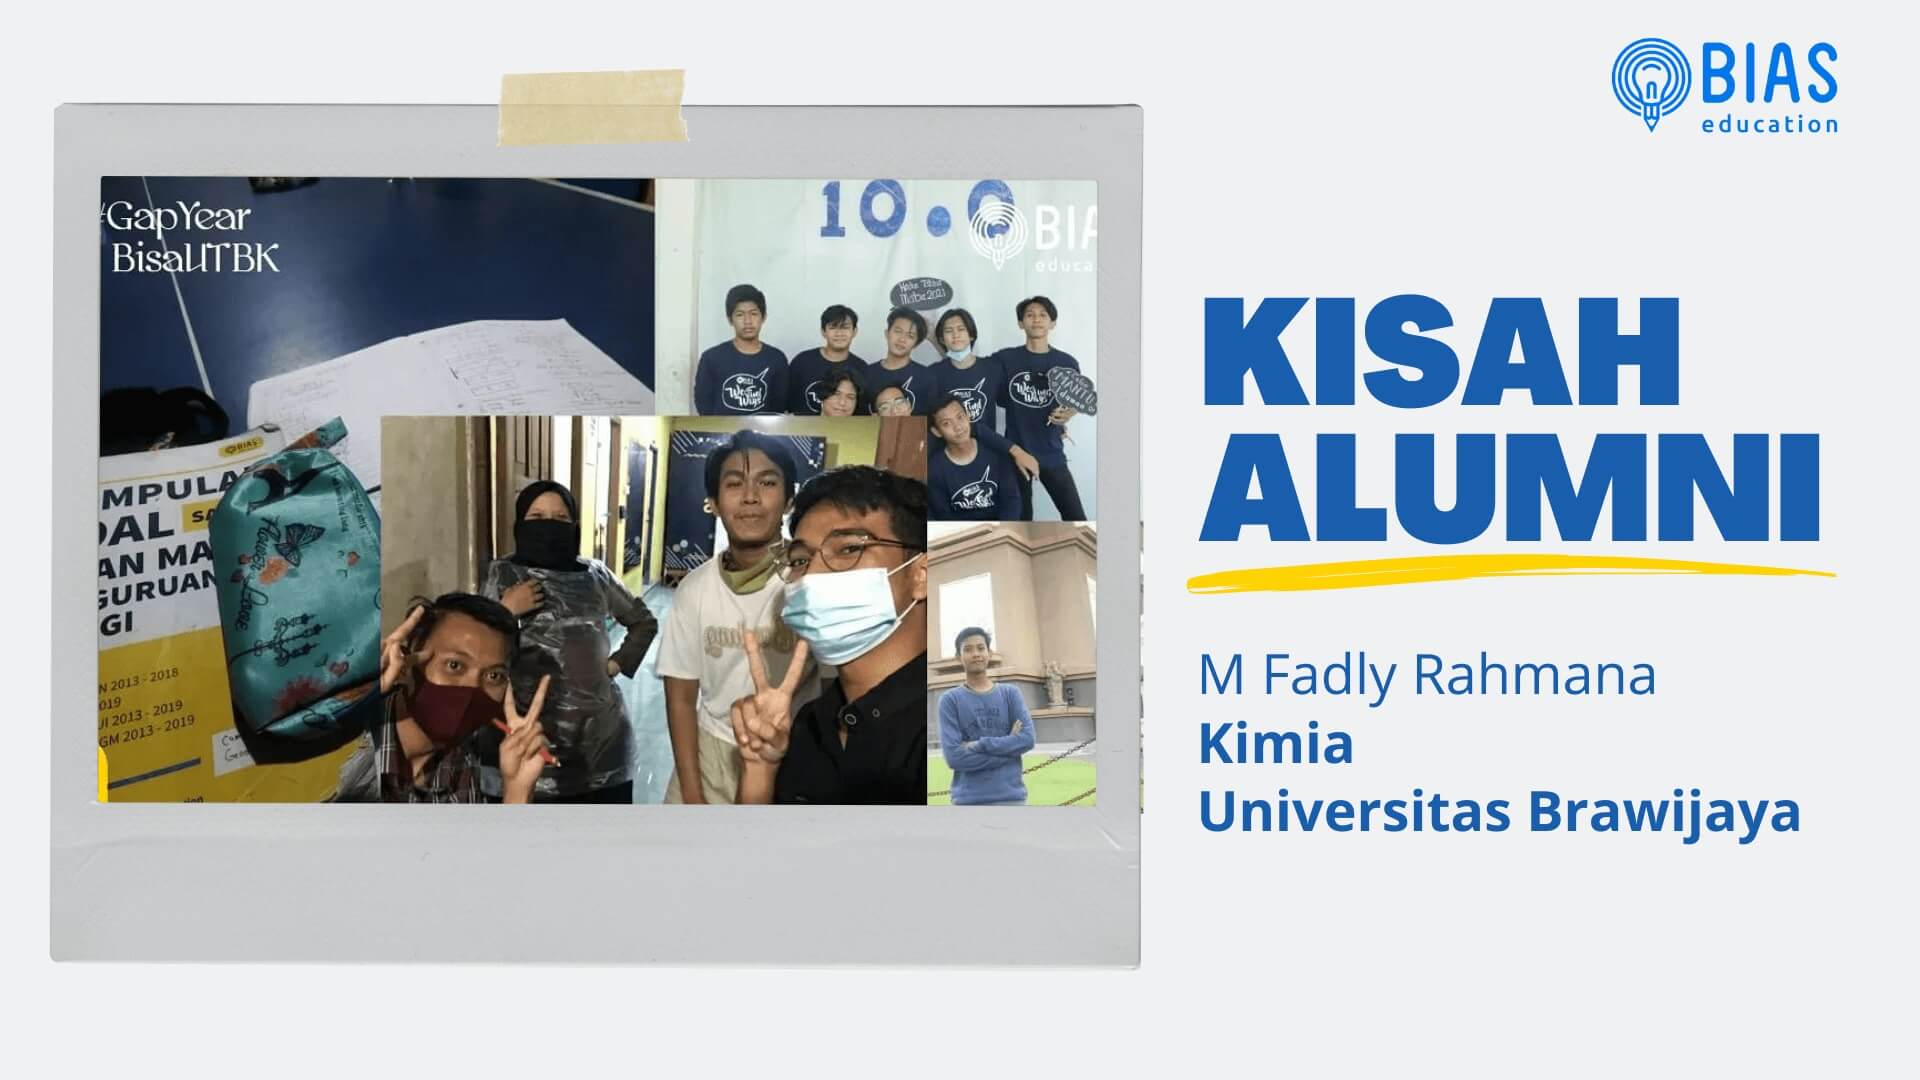 Kisah Alumni - M Fadly Rahmana